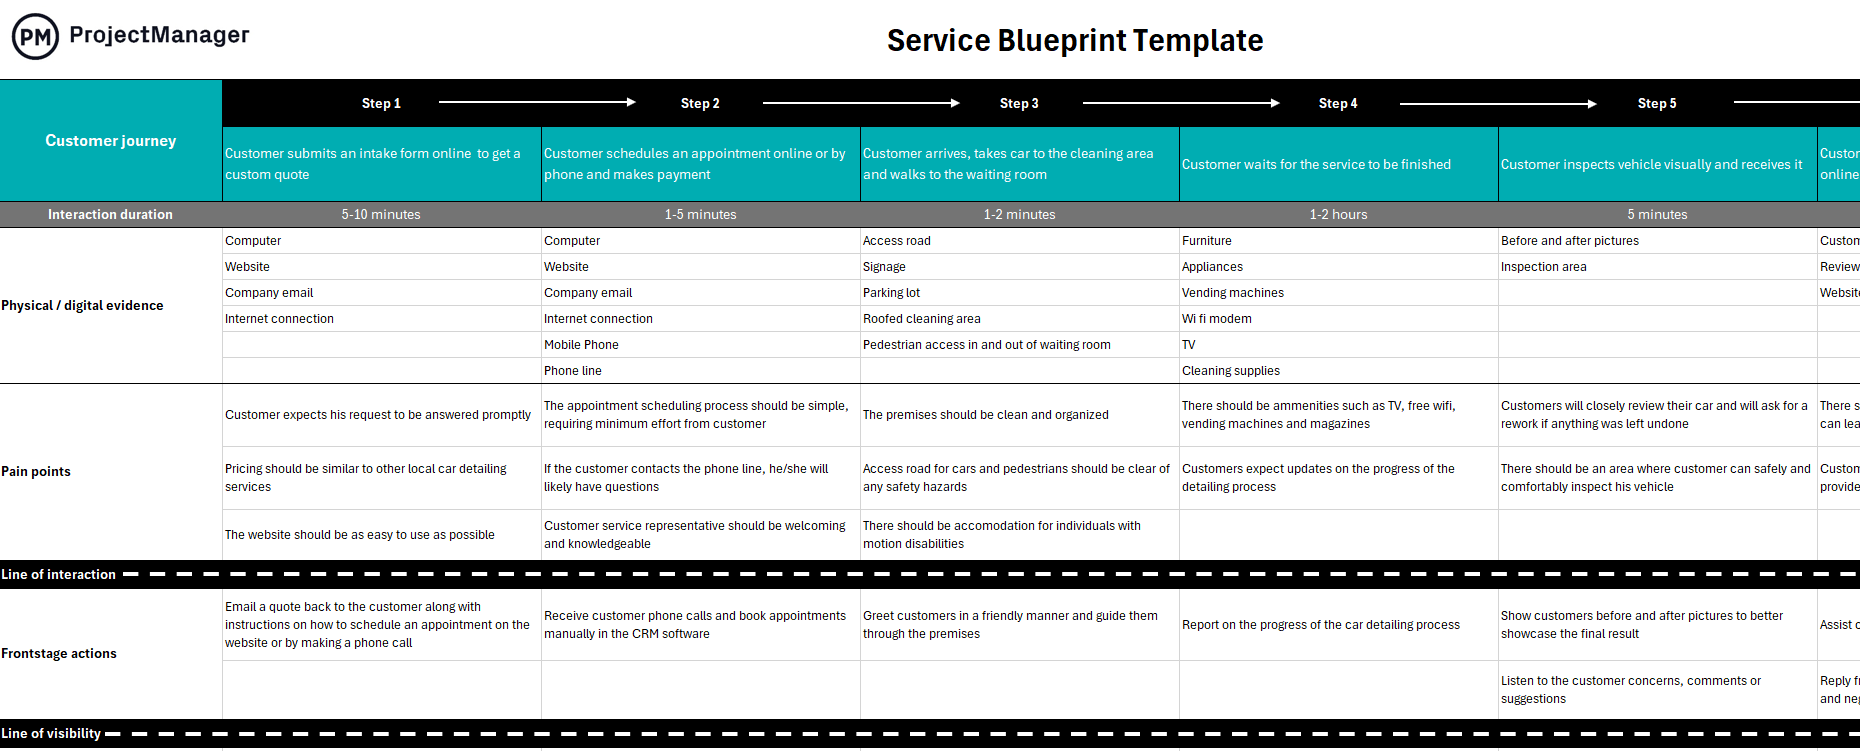 ProjectManager's service blueprint template